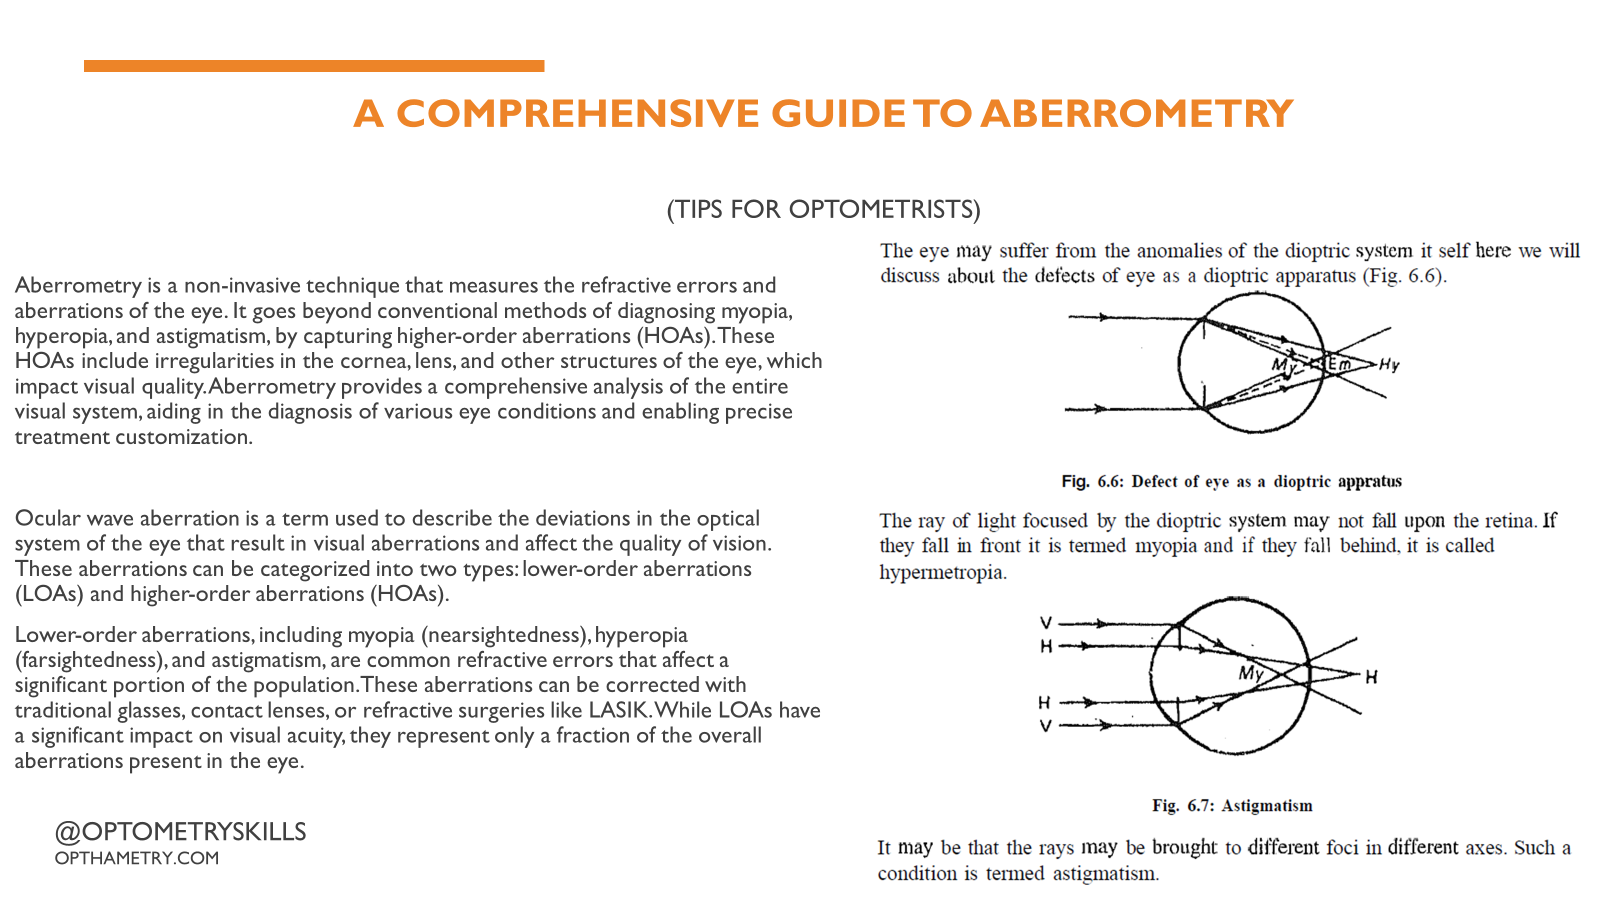 Guide to Aberrometry